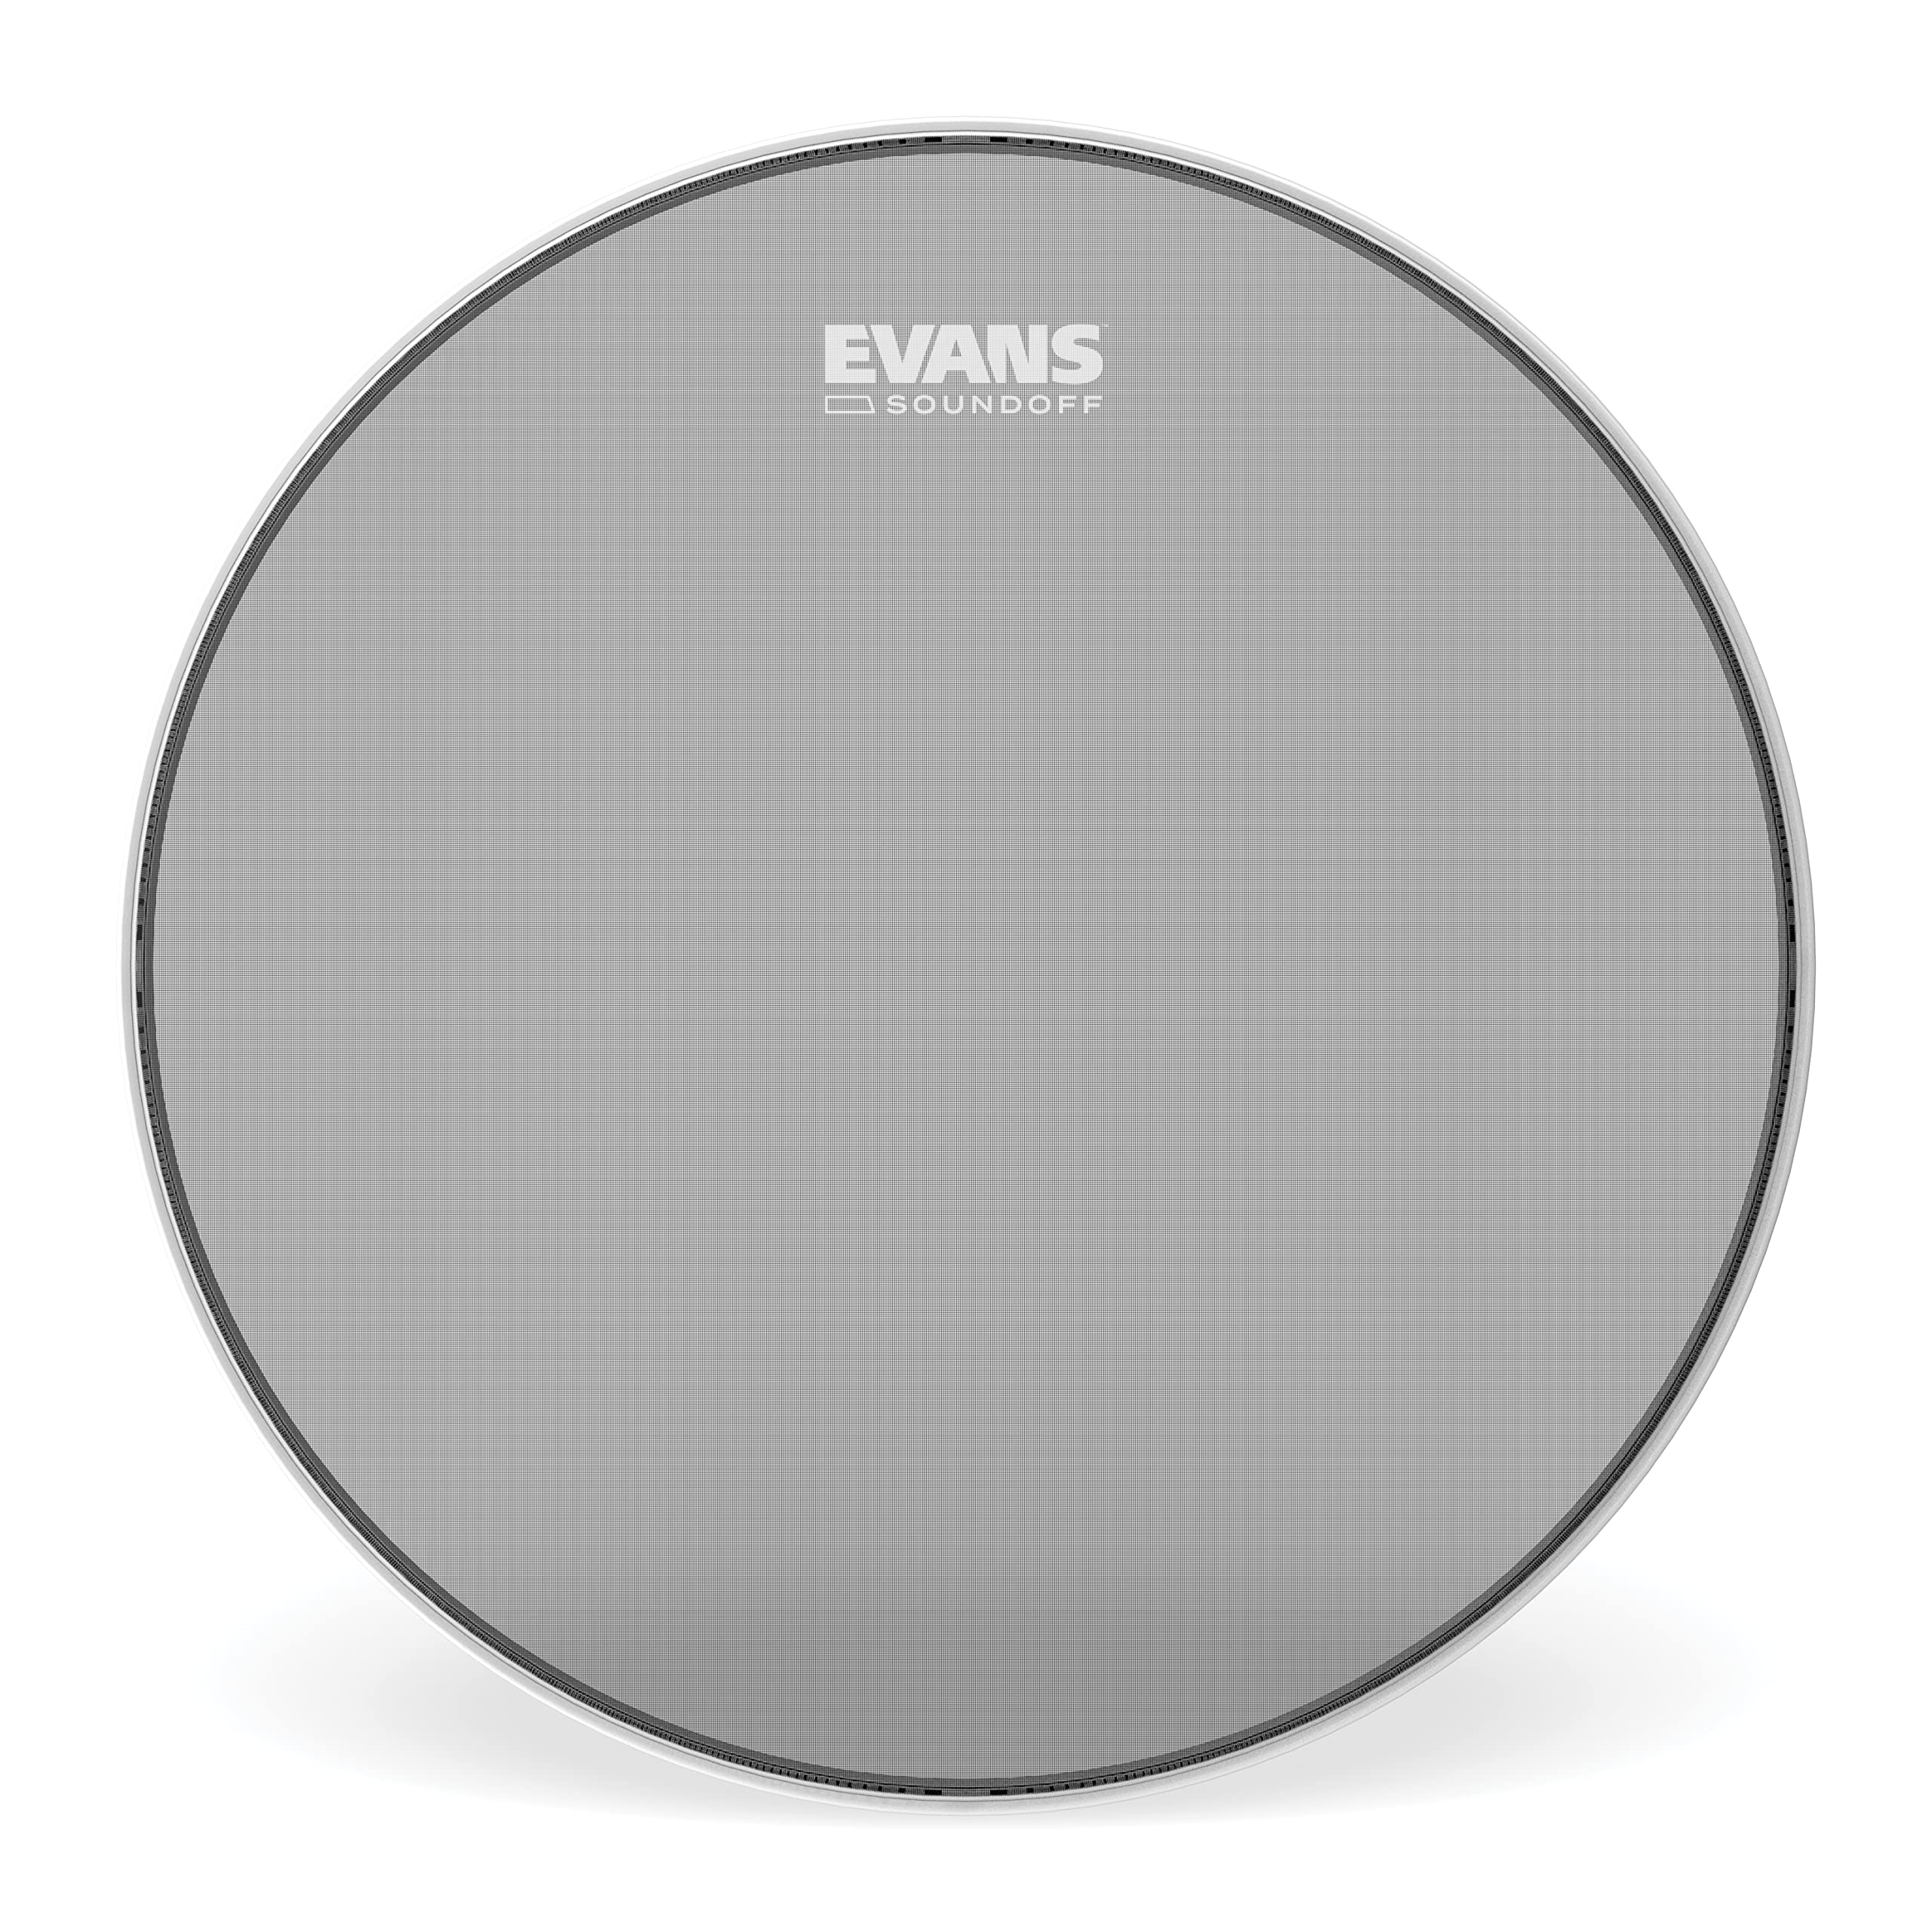 Evans SoundOff Drumhead 14 inch (TT14SO1)